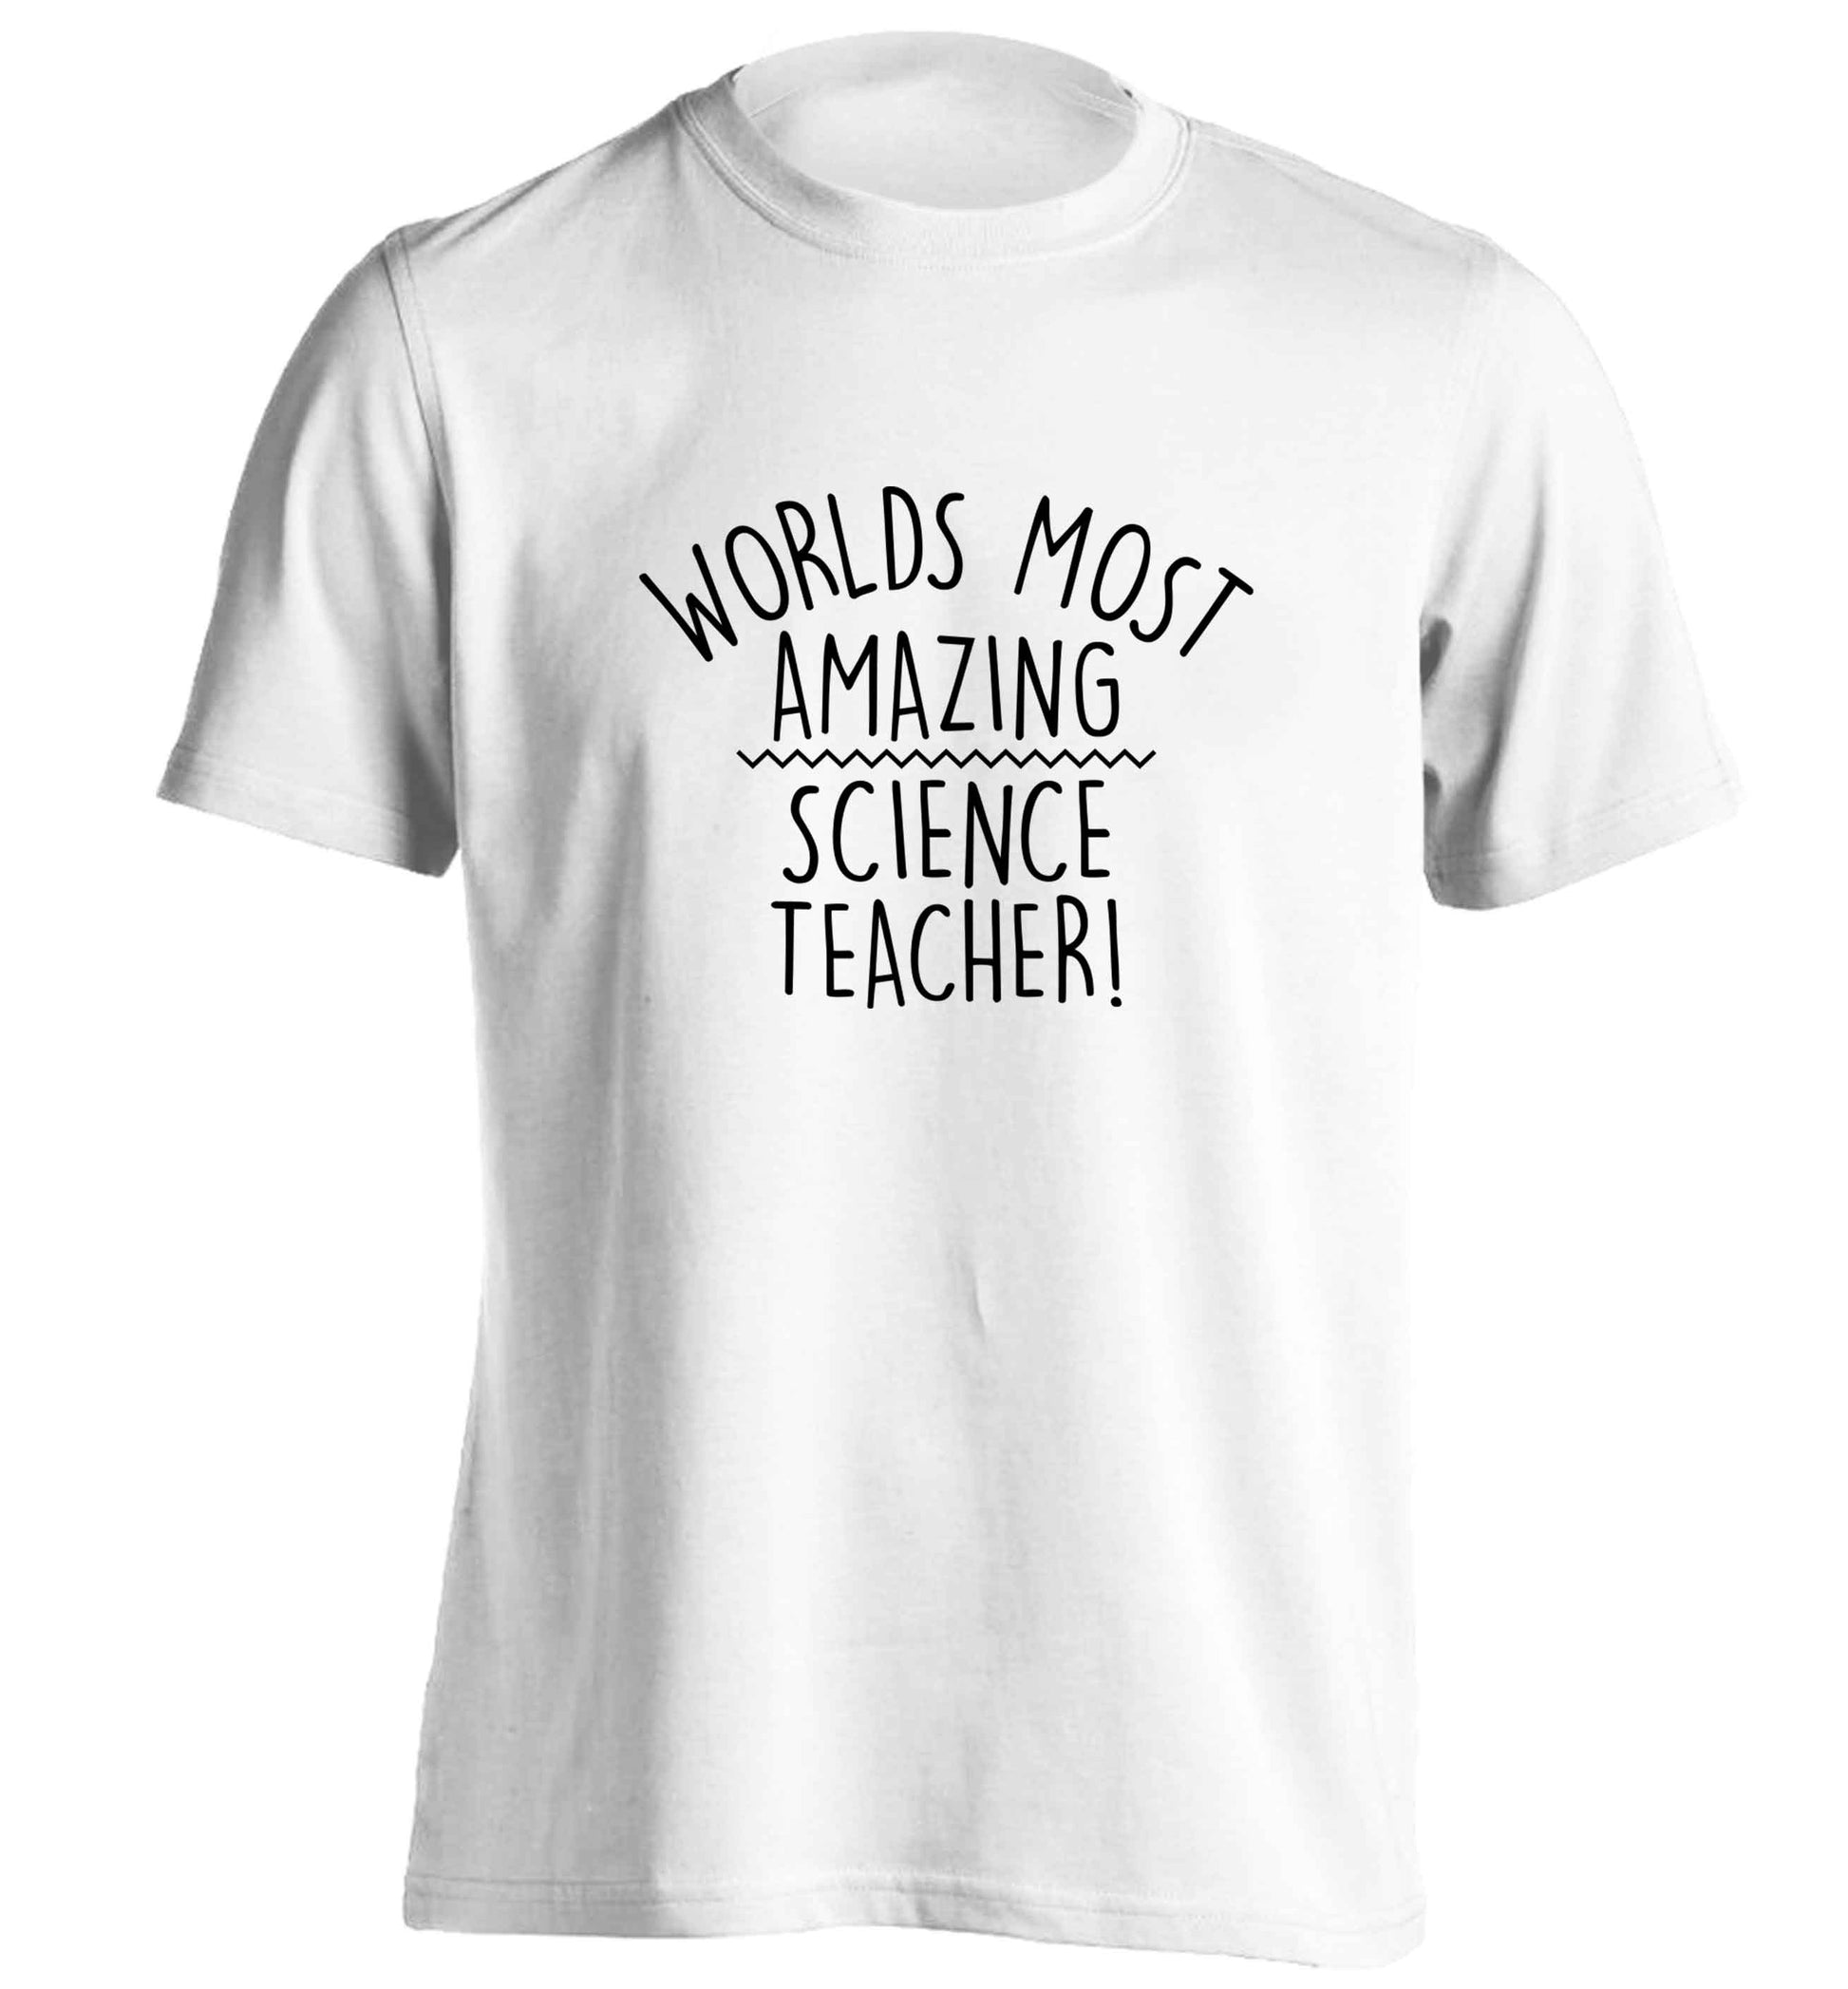 Worlds most amazing science teacher adults unisex white Tshirt 2XL